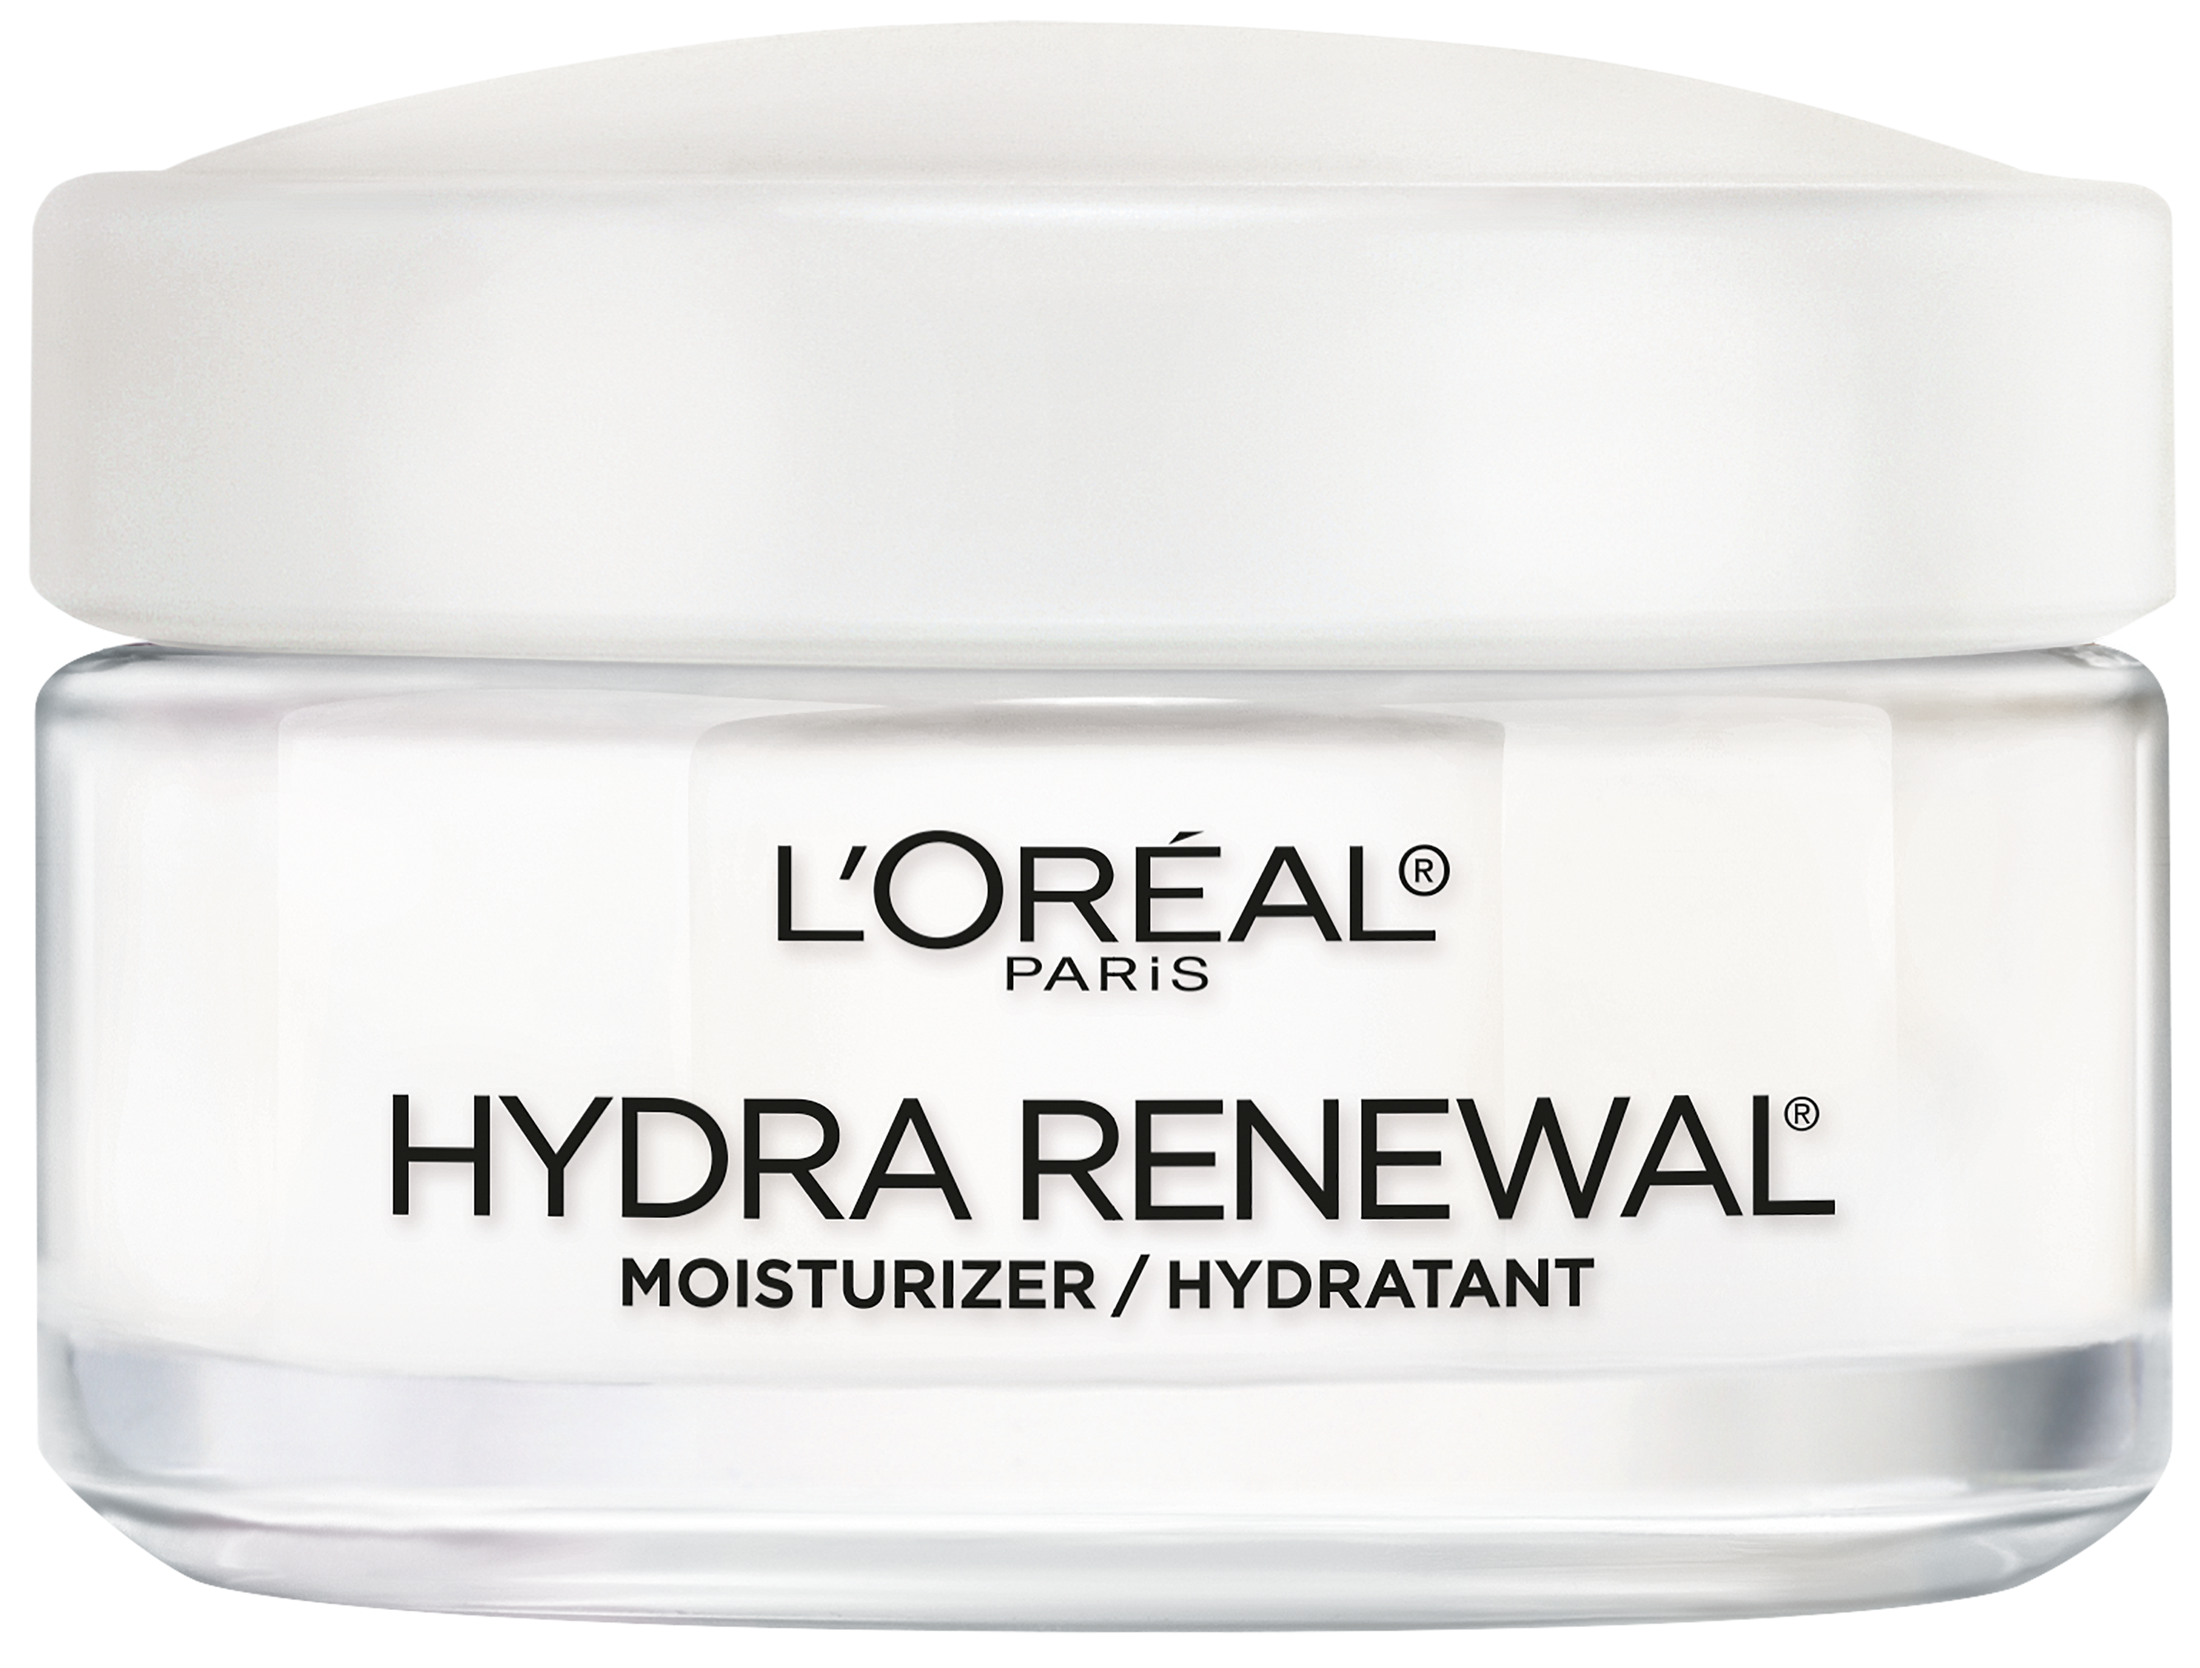 L'Oreal Paris Dermo Expertise Hydra Renewal Moisture Cream, 1.7 oz - image 1 of 7